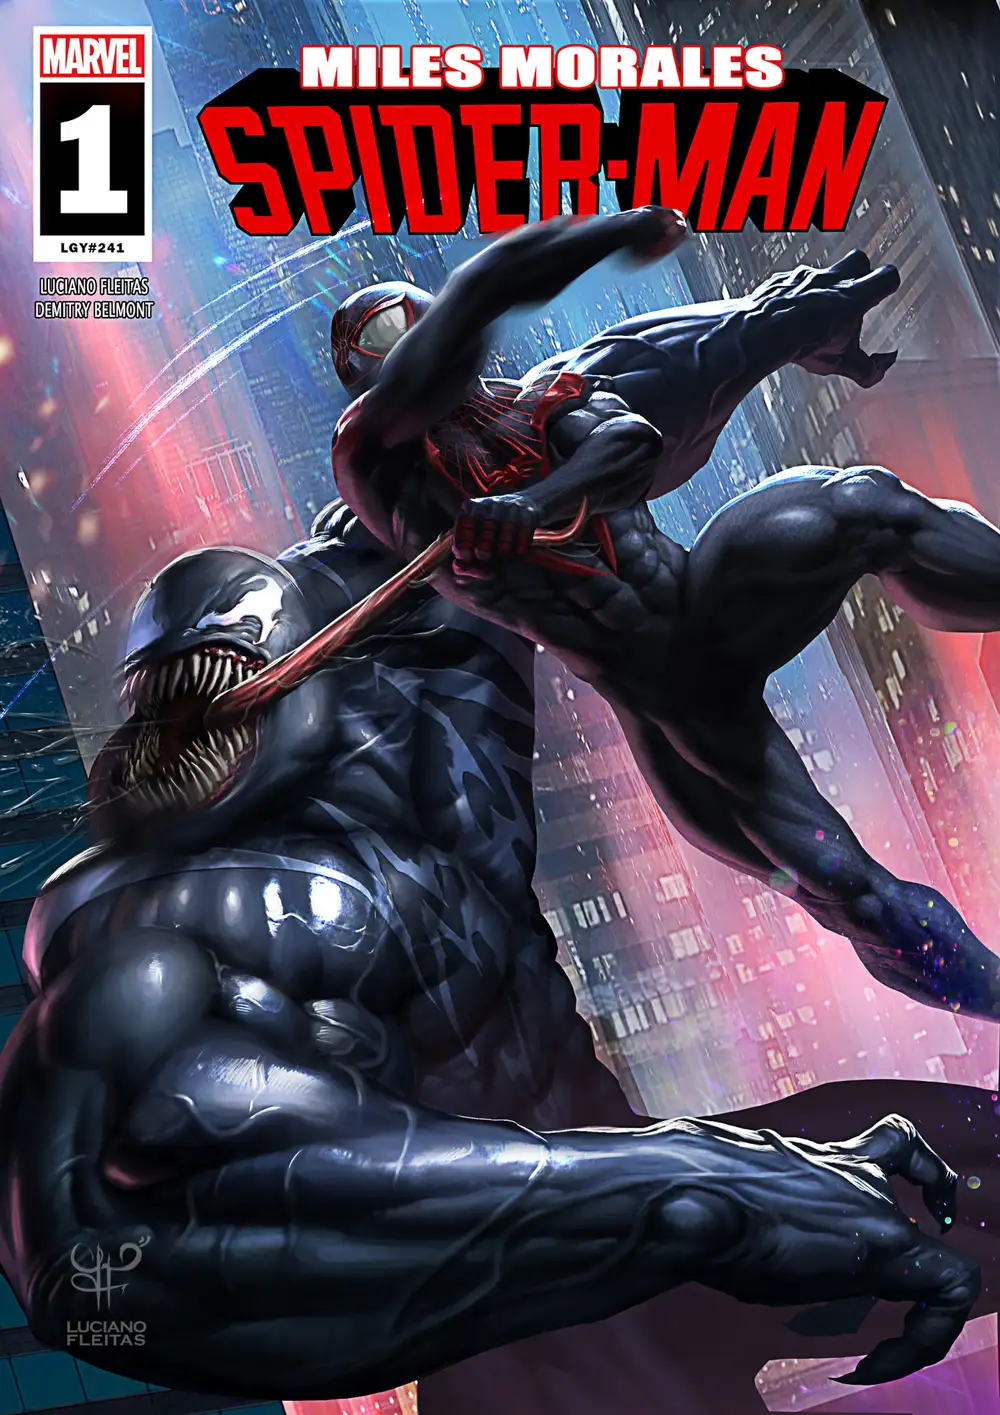 Download 4k Wallpaper Spider man Venom Marvel comics Artwork